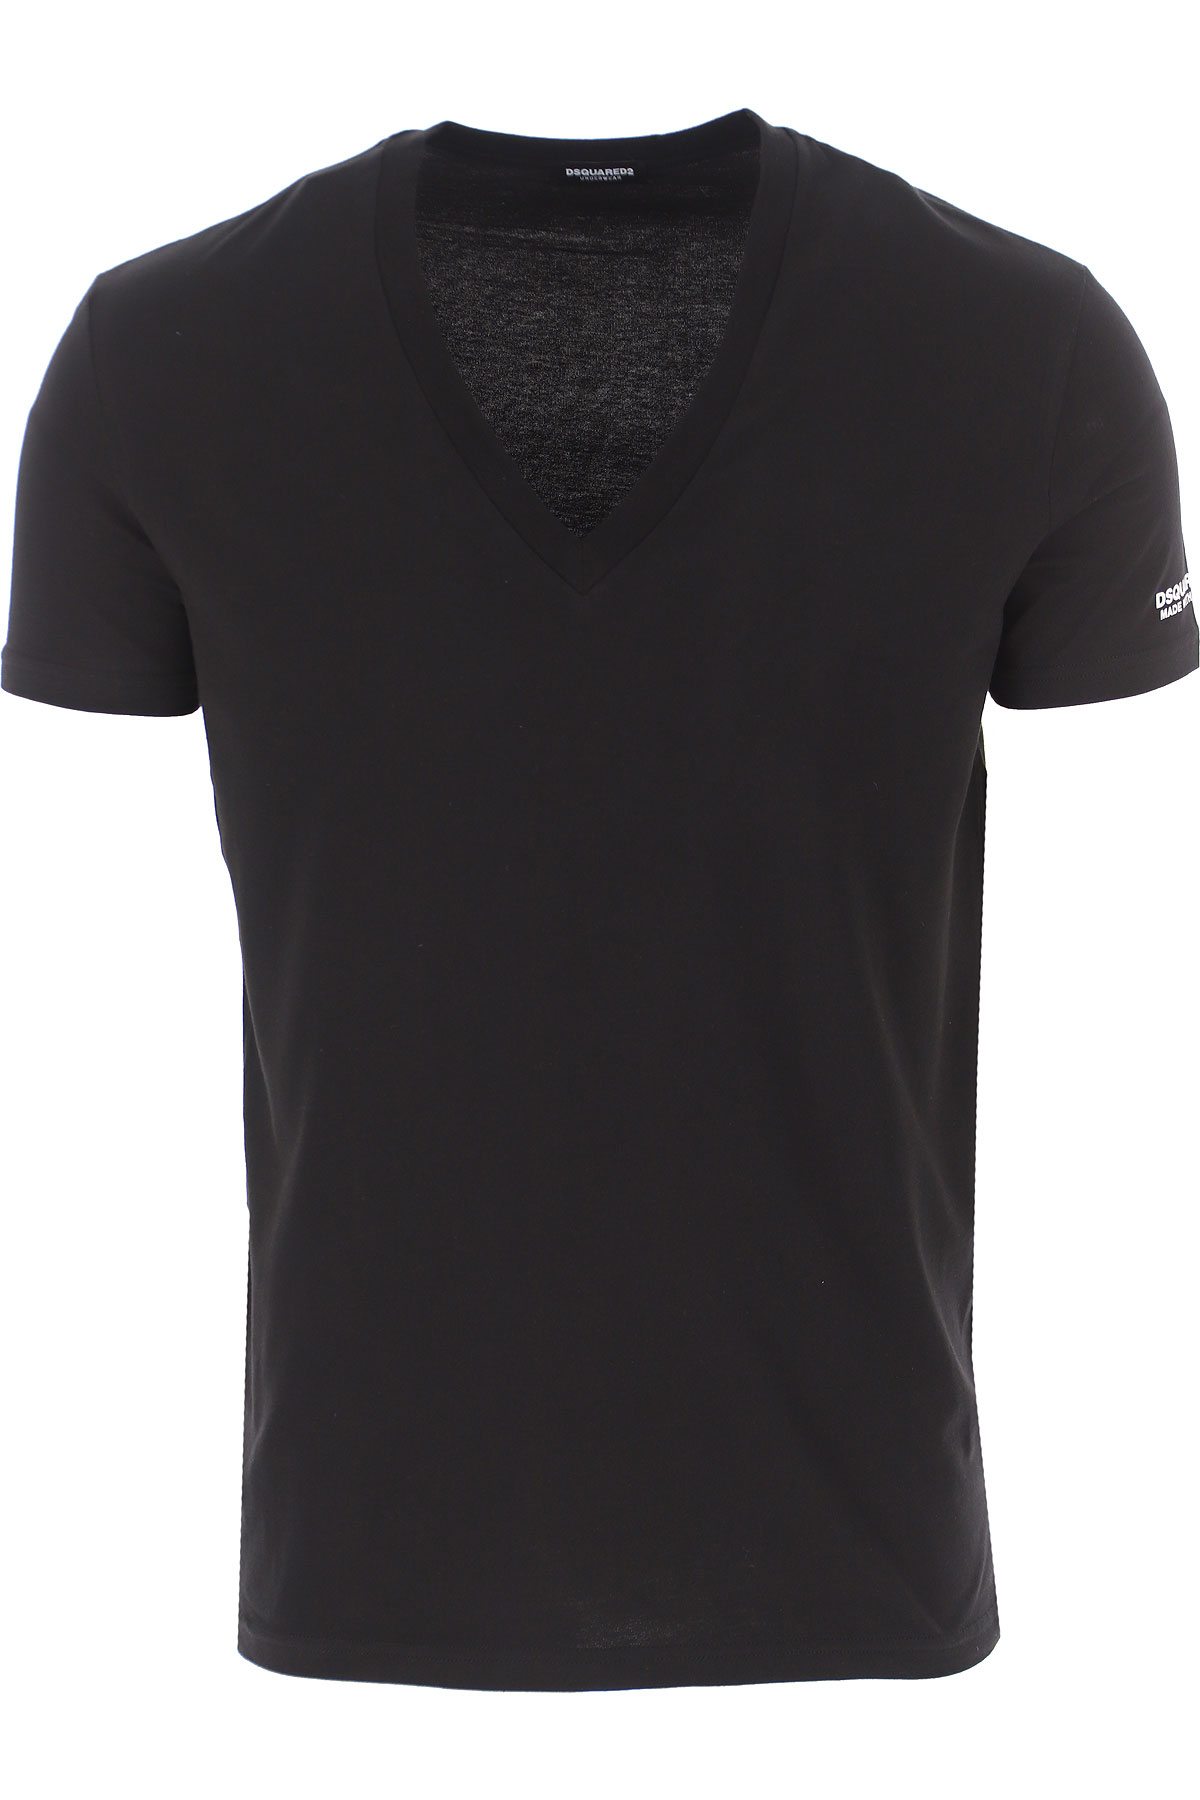 Best Selling Dsquared2 T-Shirt for Men, Black, Cotton, 2021, M S XS |  AccuWeather Shop